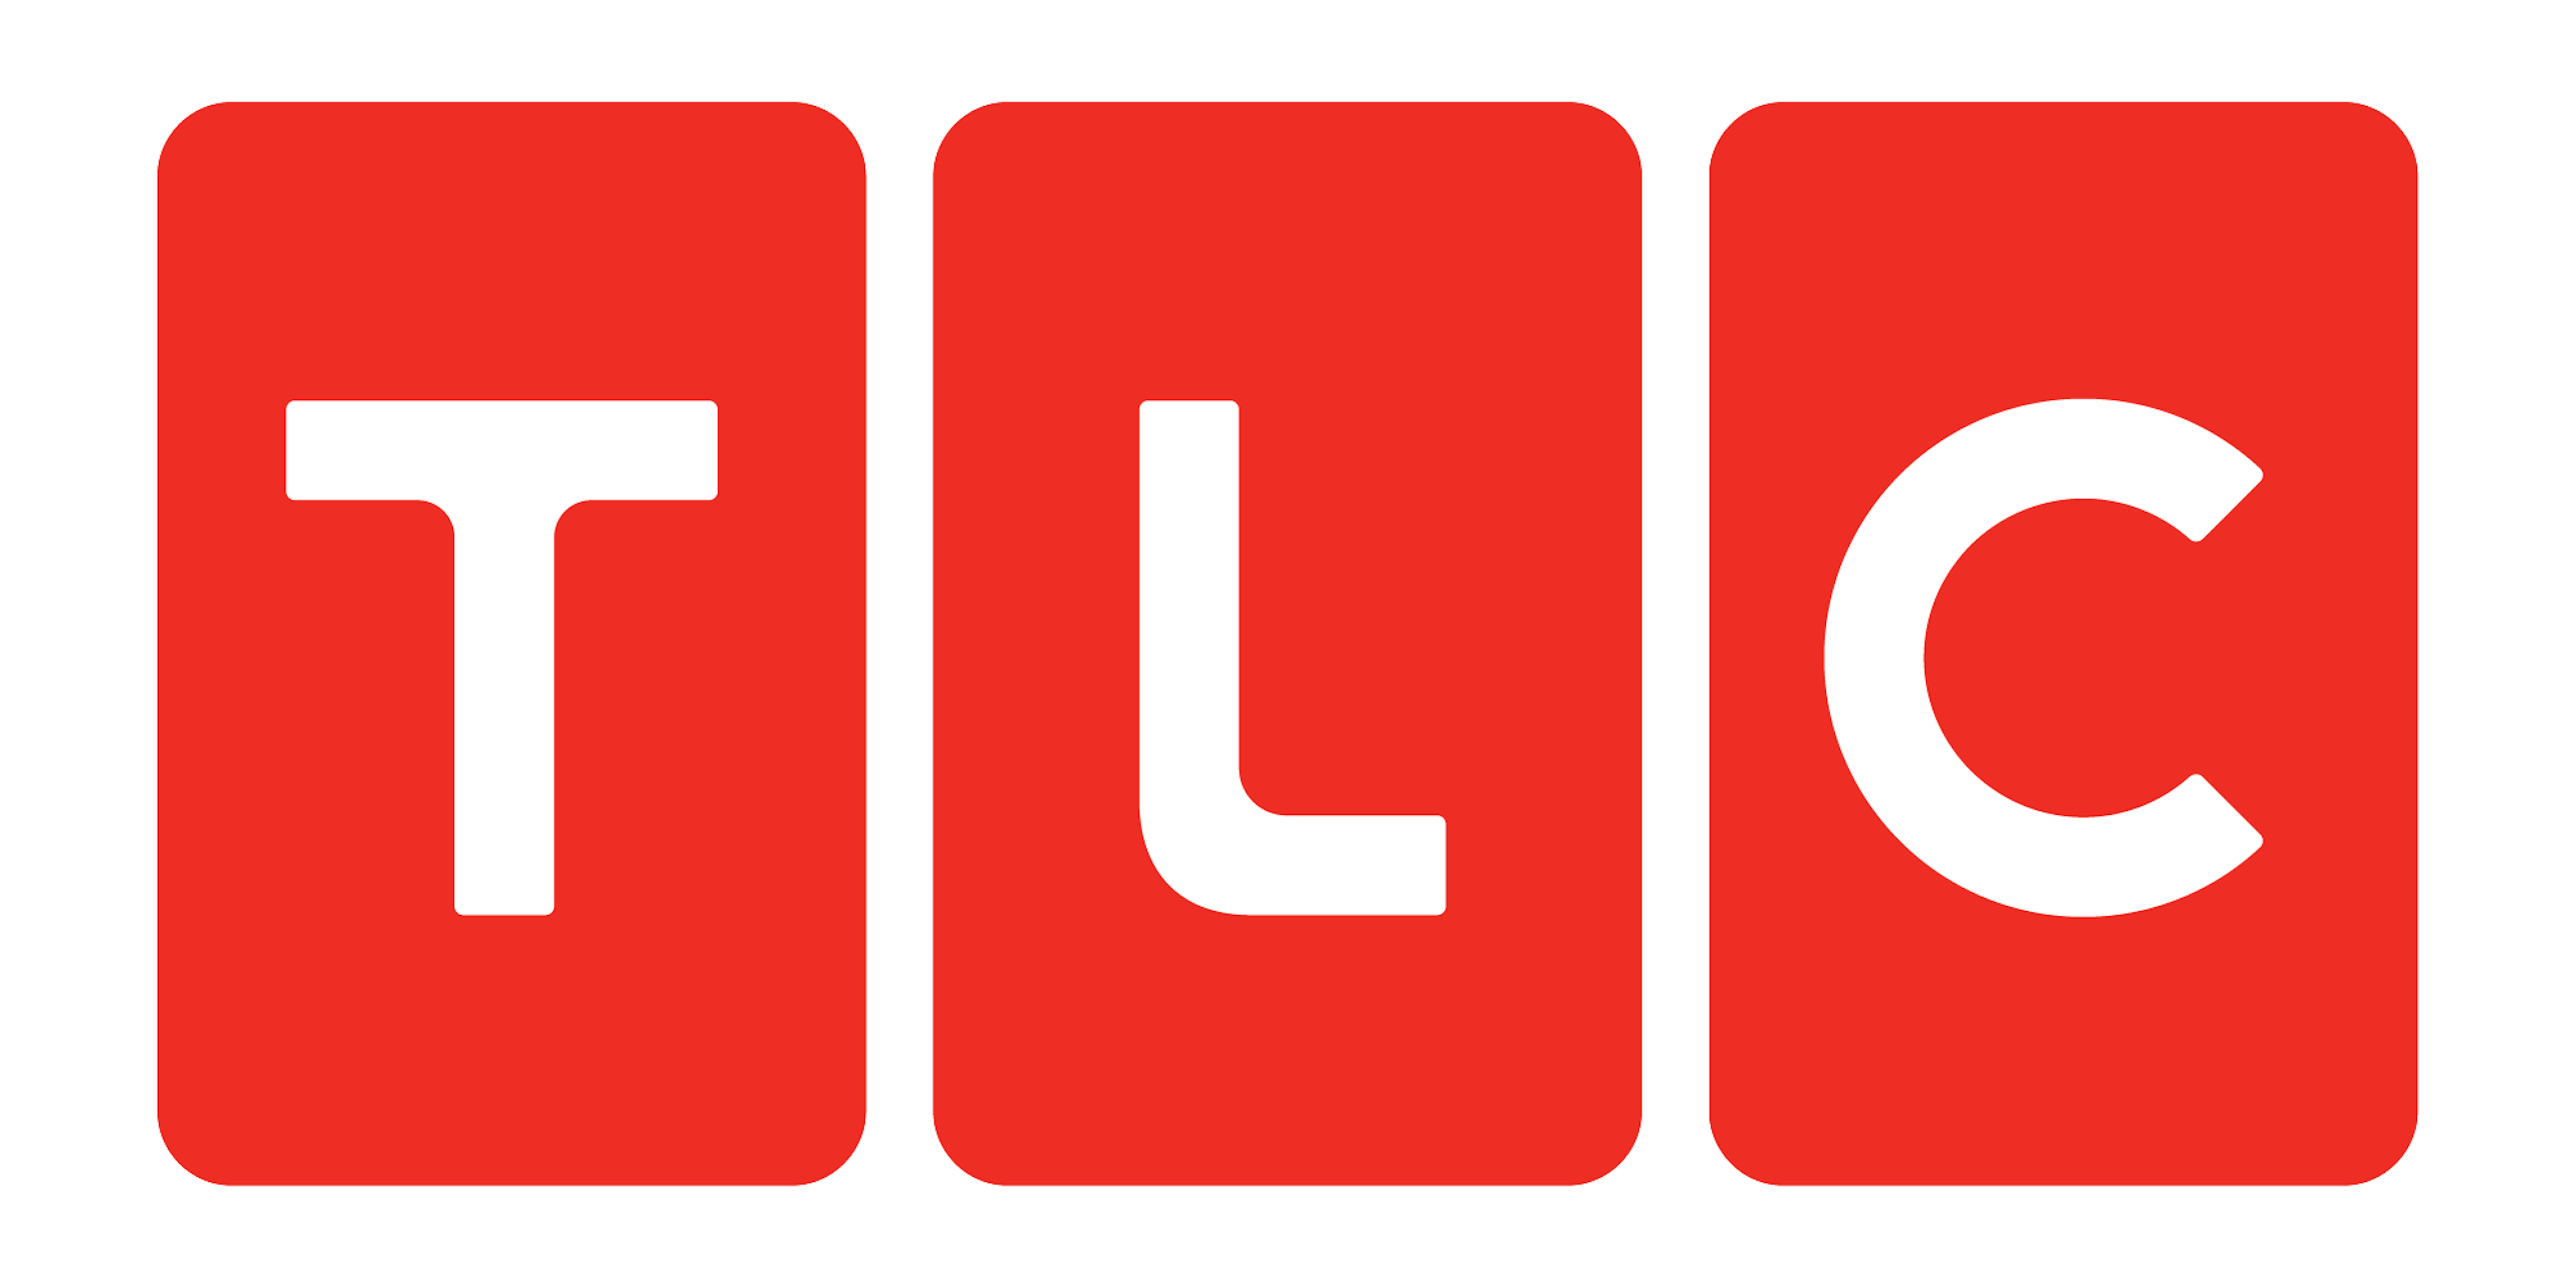 TLC logo